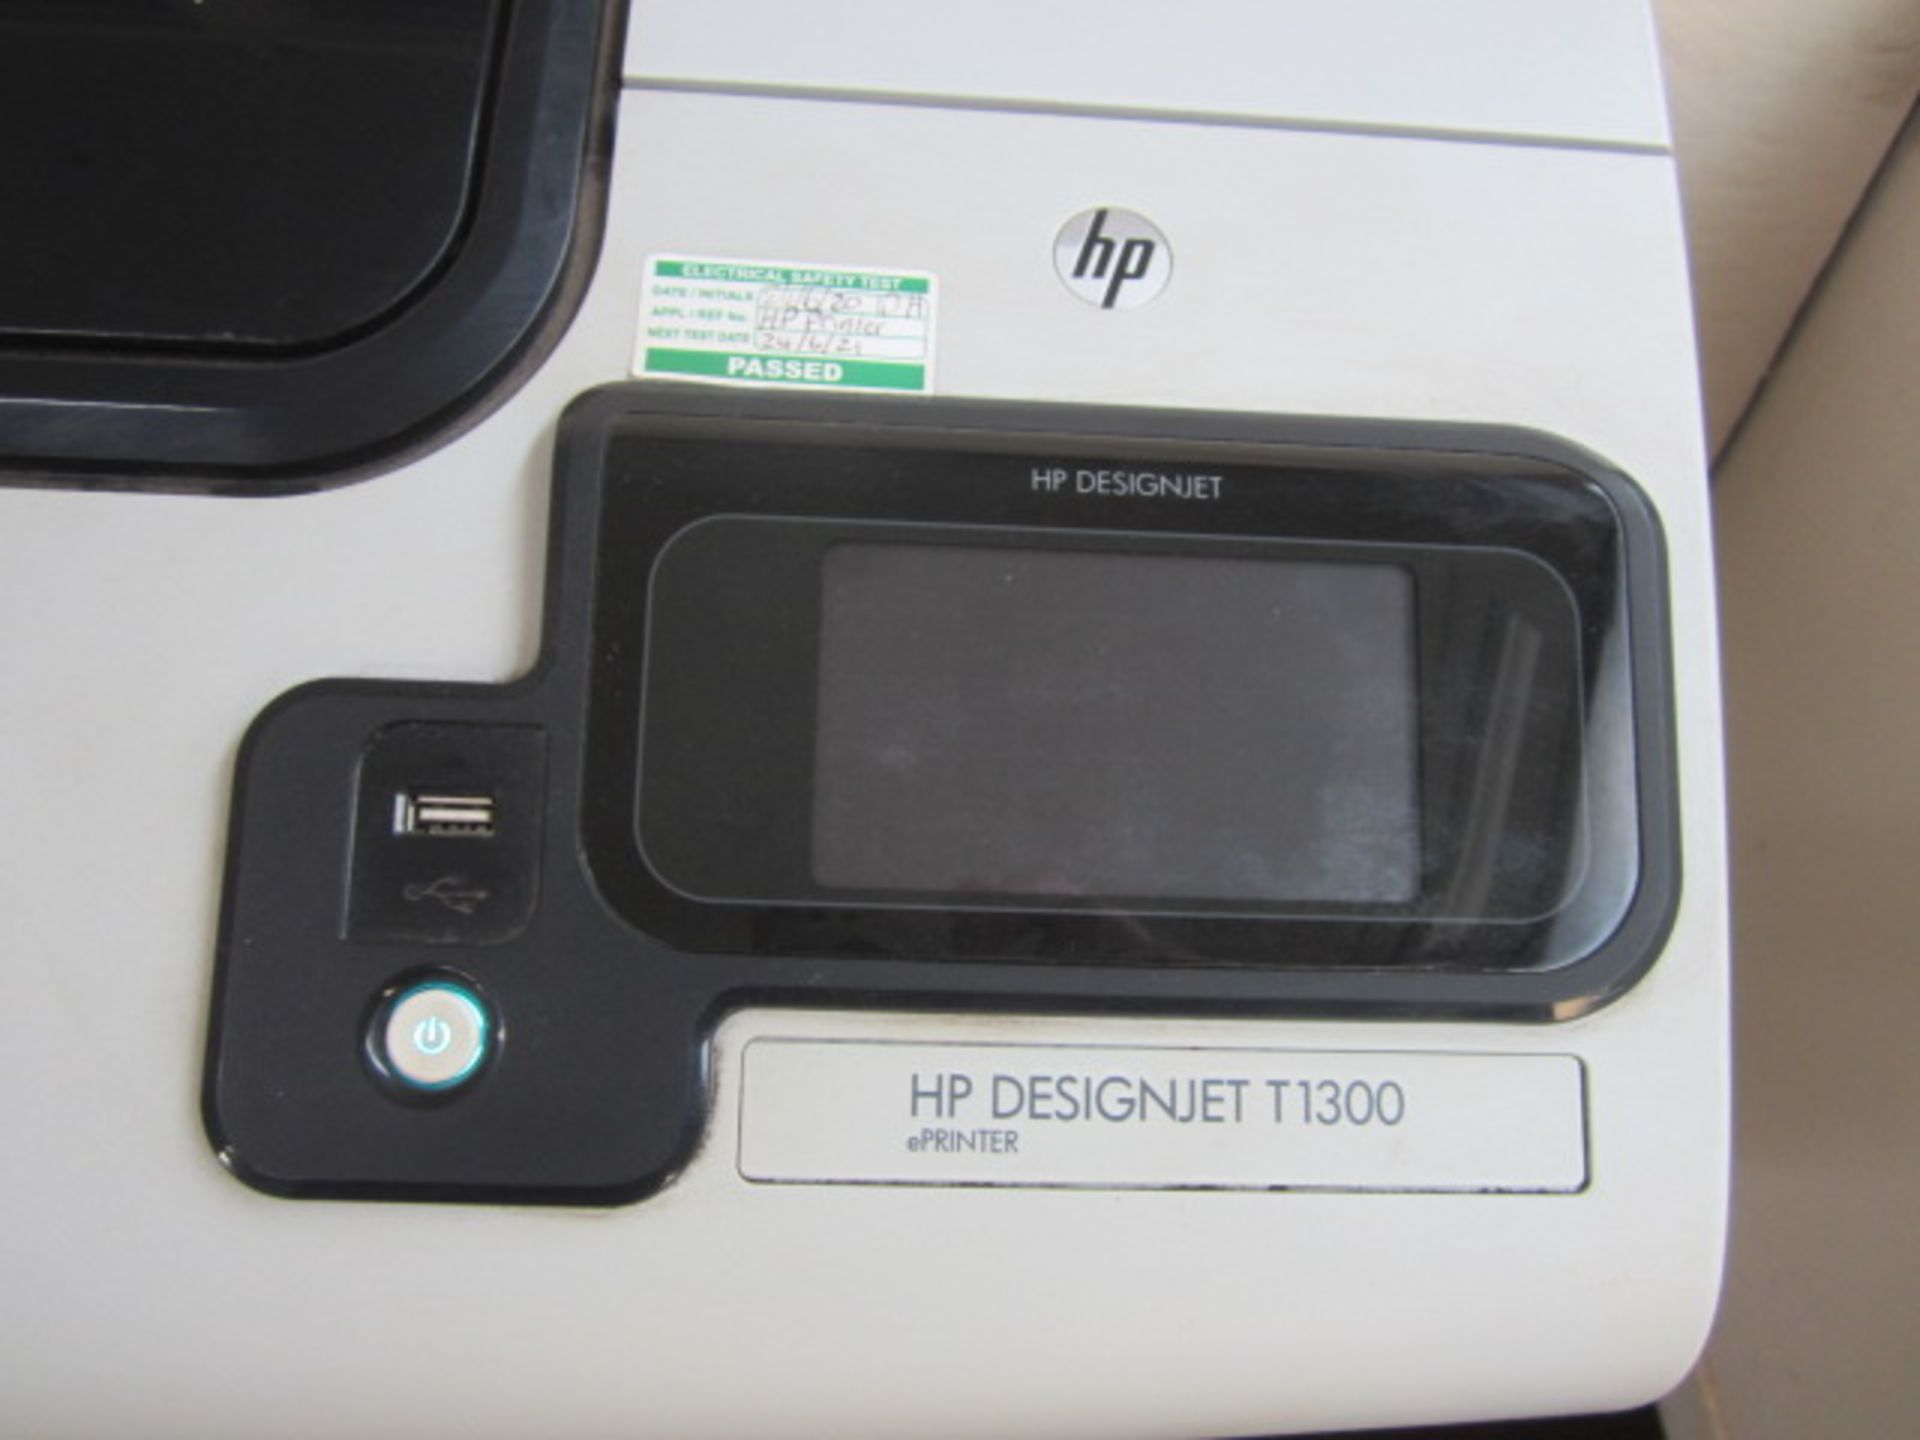 HP Designjet T1300 plans printer - Image 2 of 4